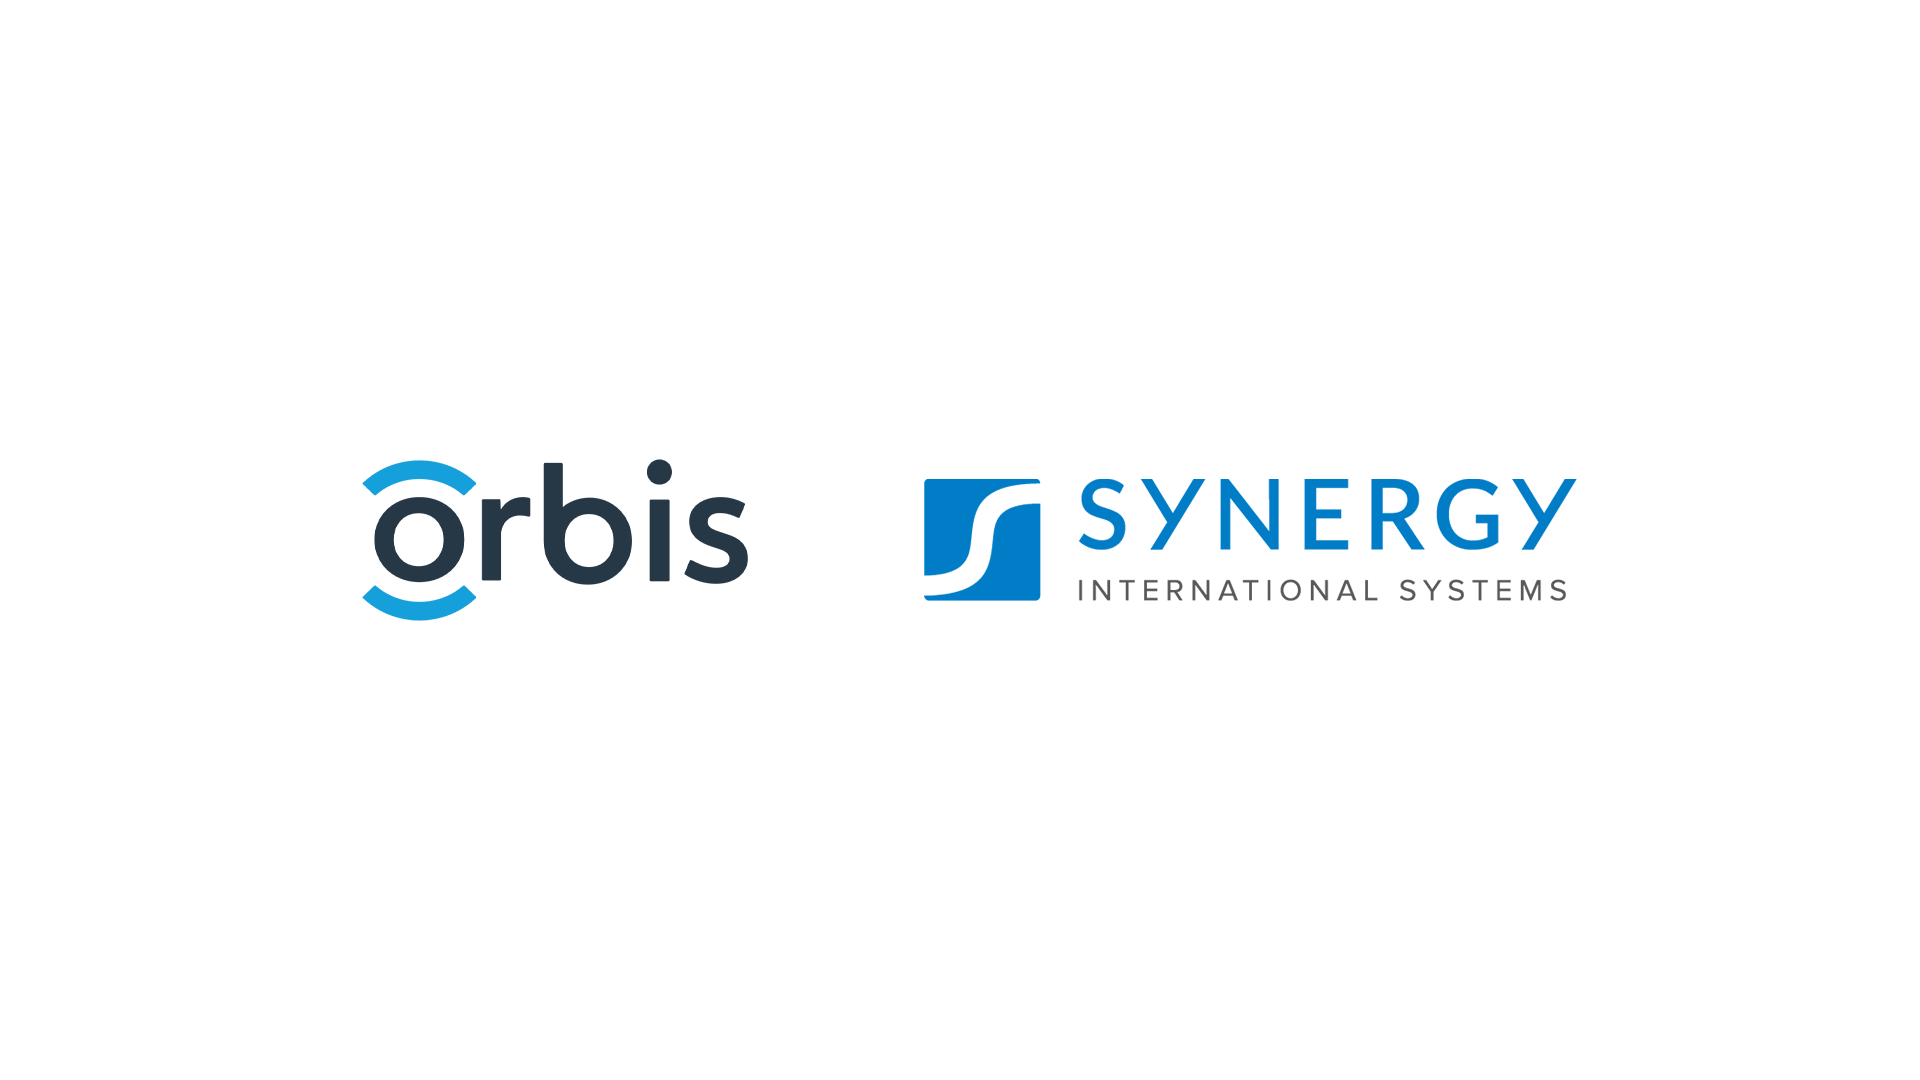 Synergy Orbis partnership